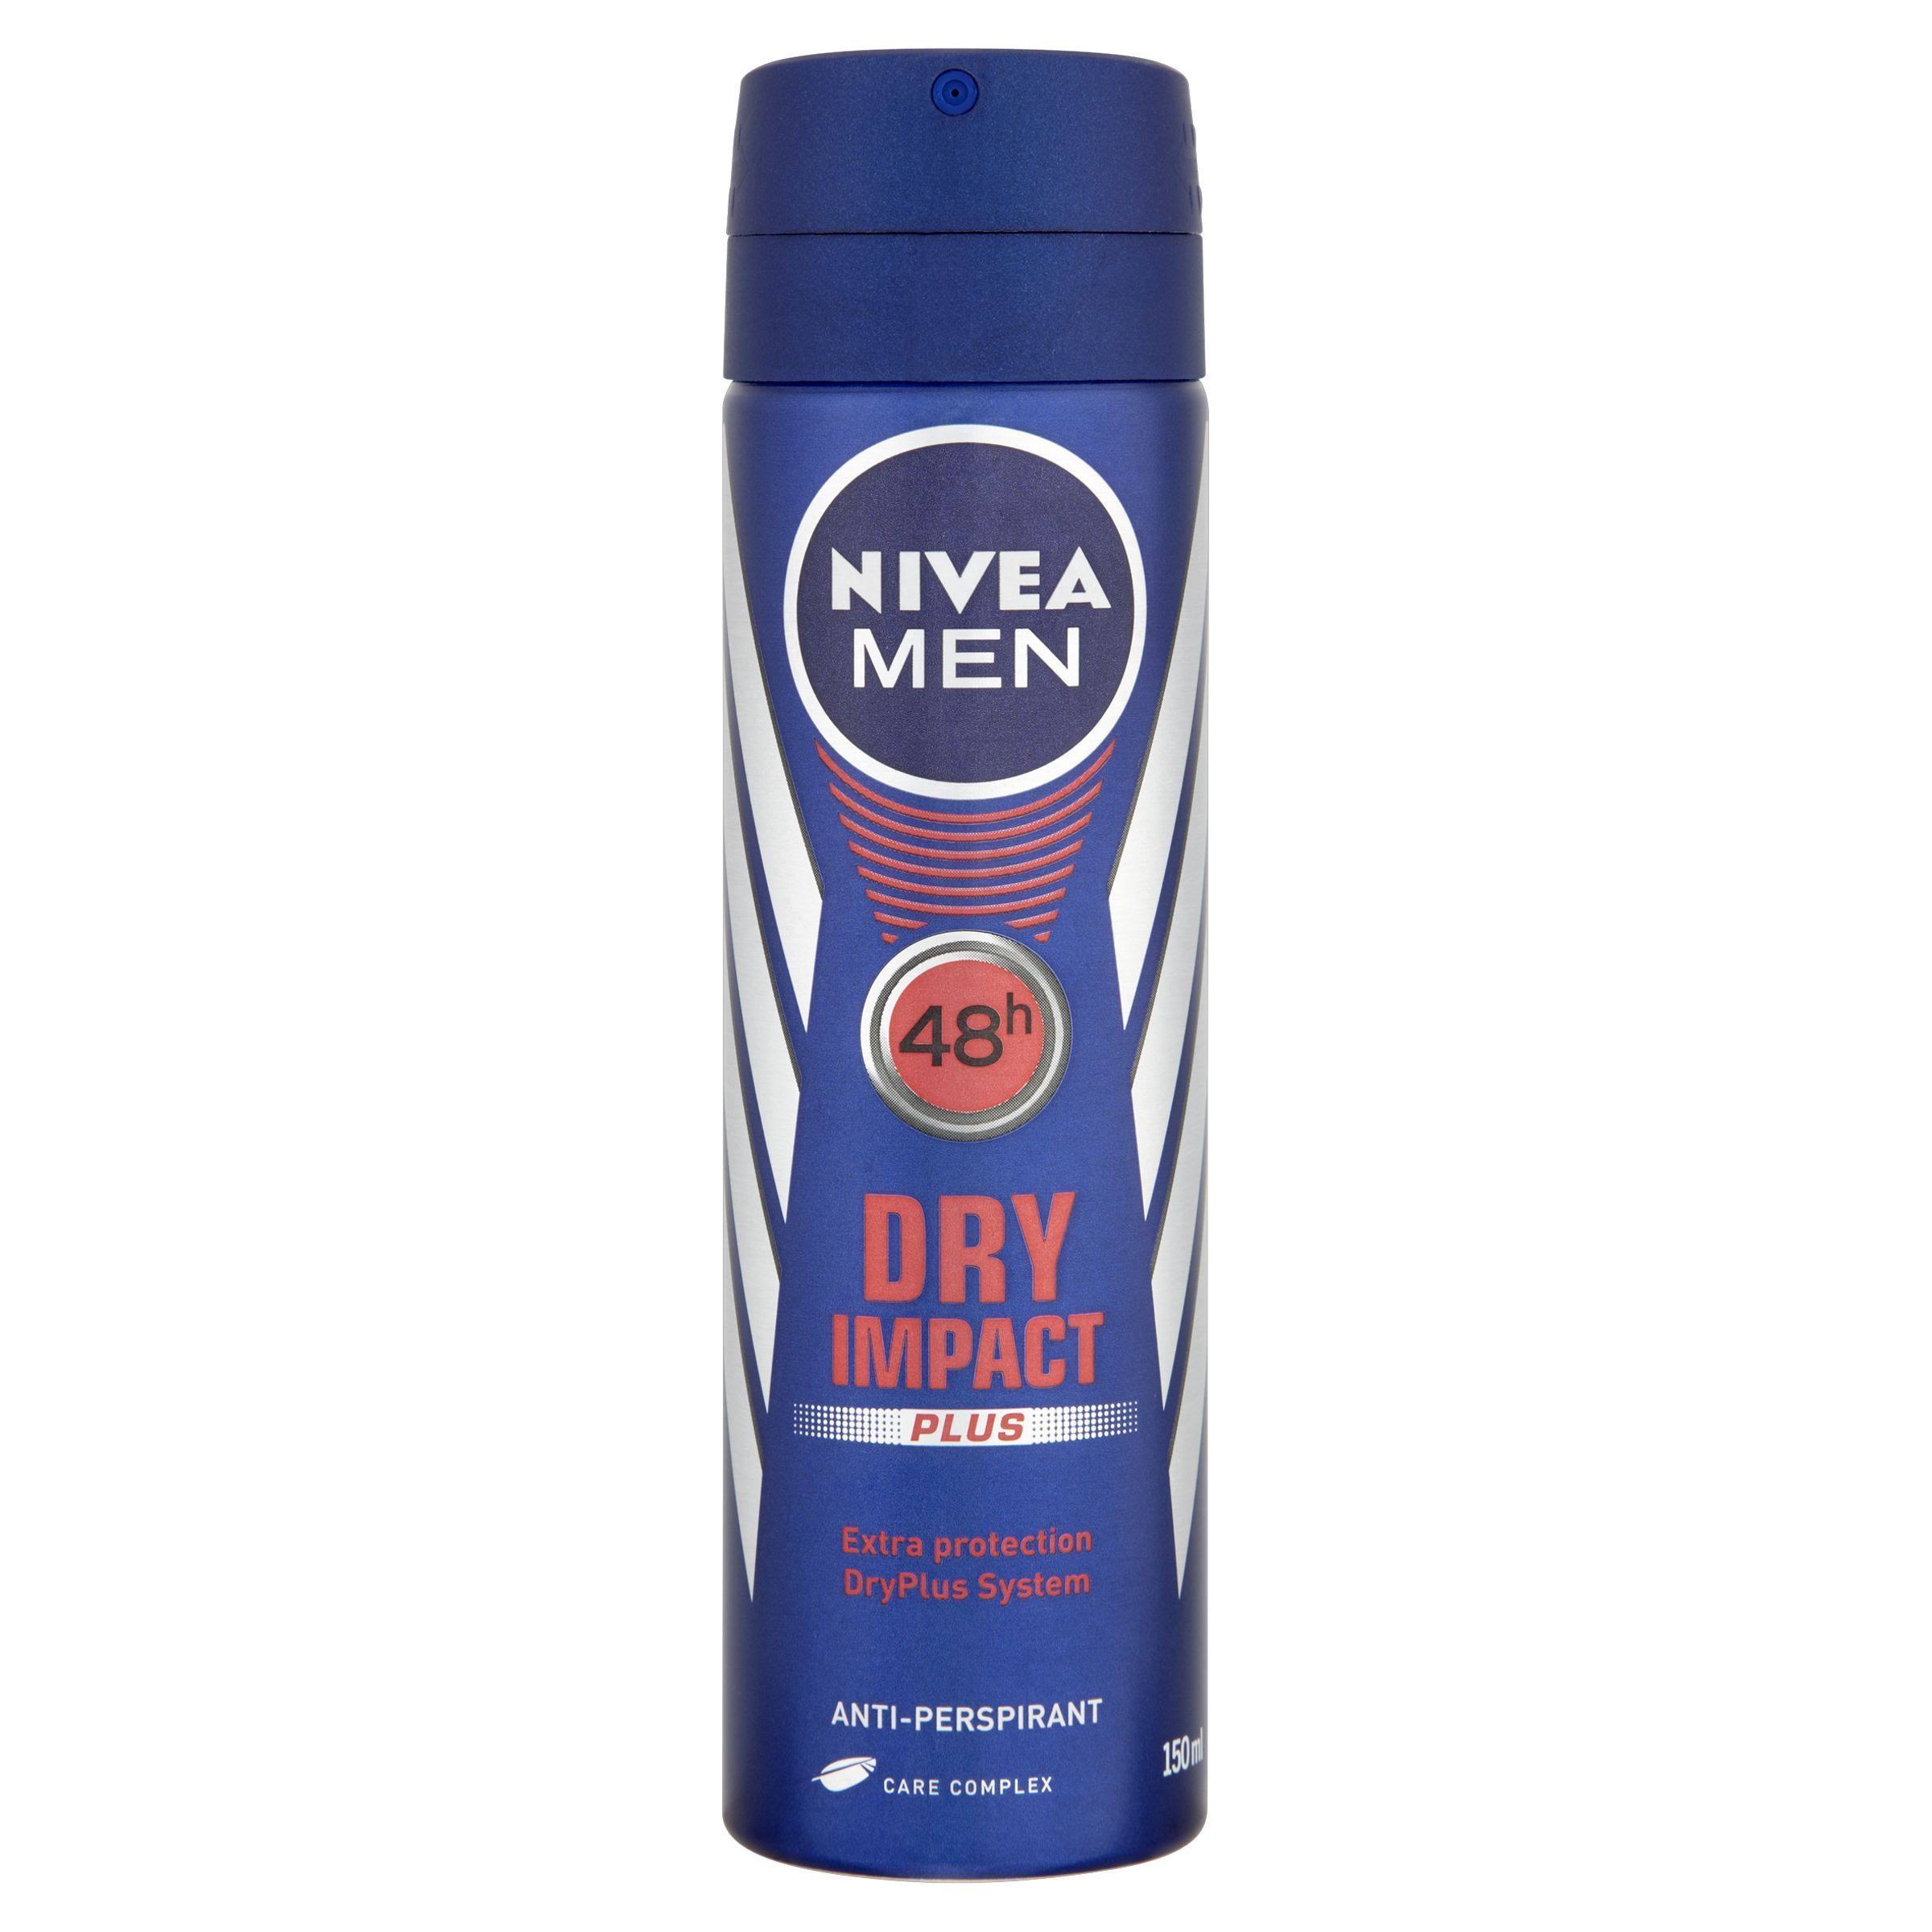 NIVEA Men's Dry Impact Anti-Perspirant Deodorant Spray - 150ml